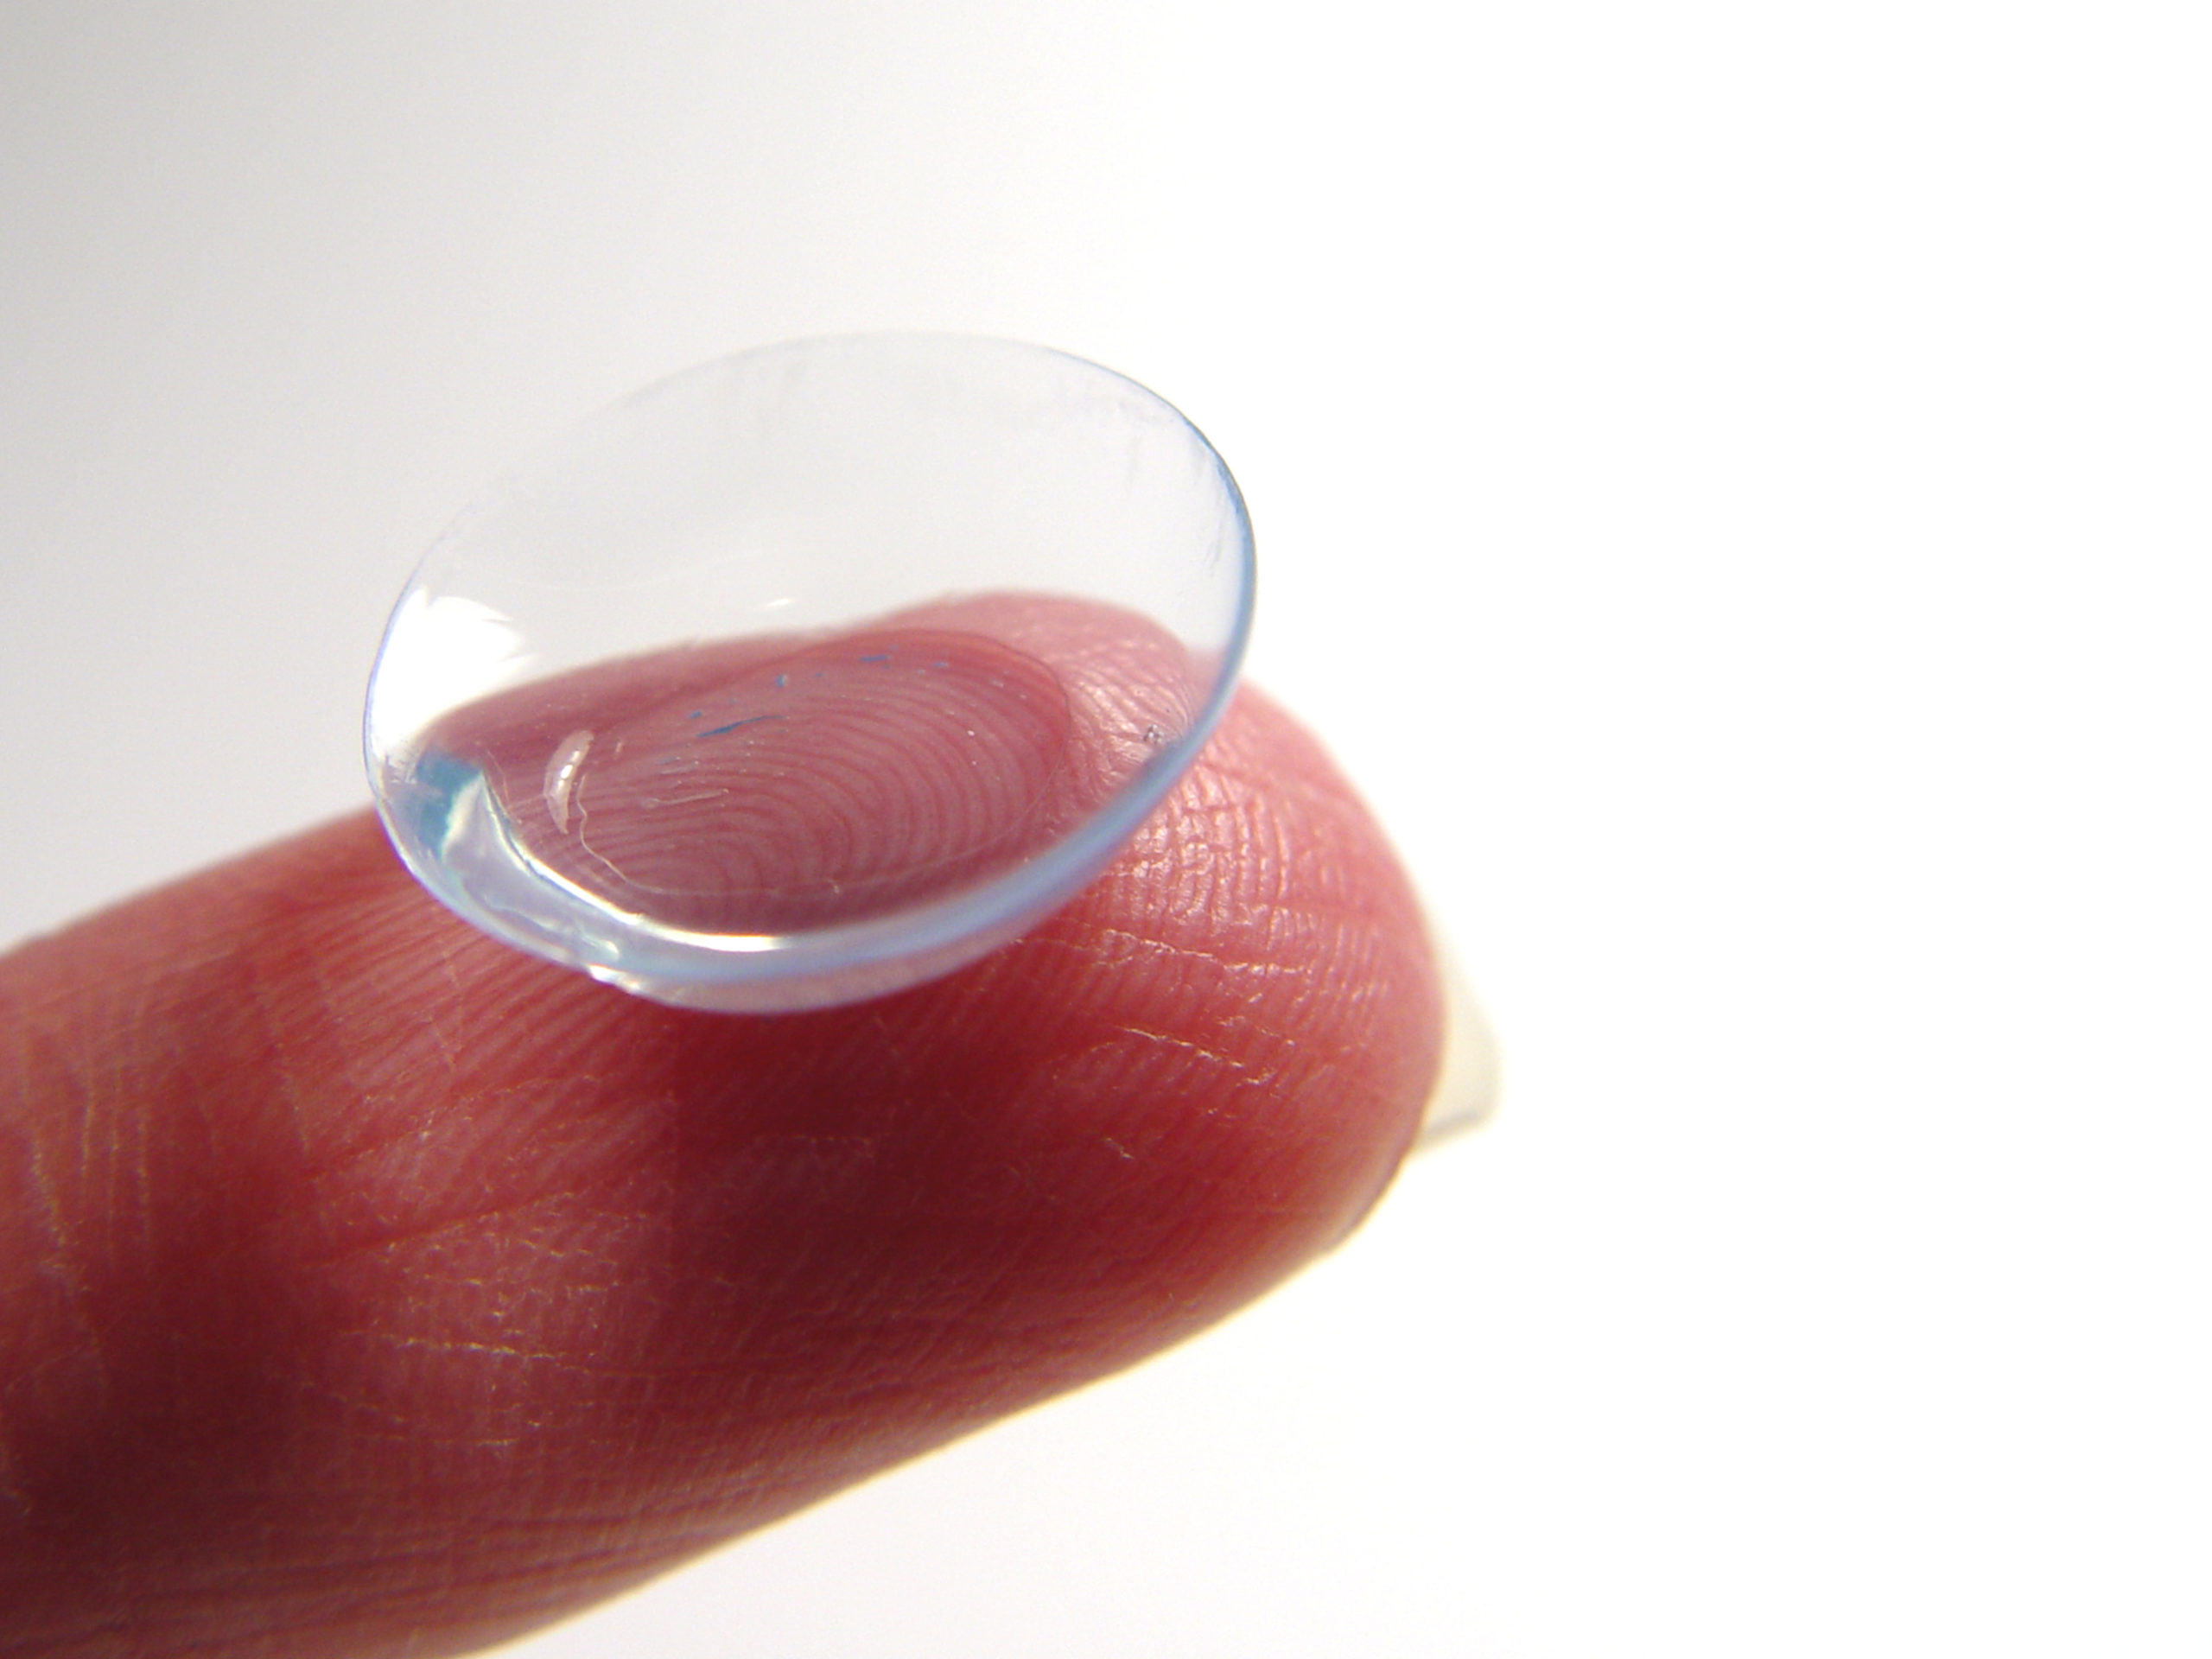 fingertip holding contact lens